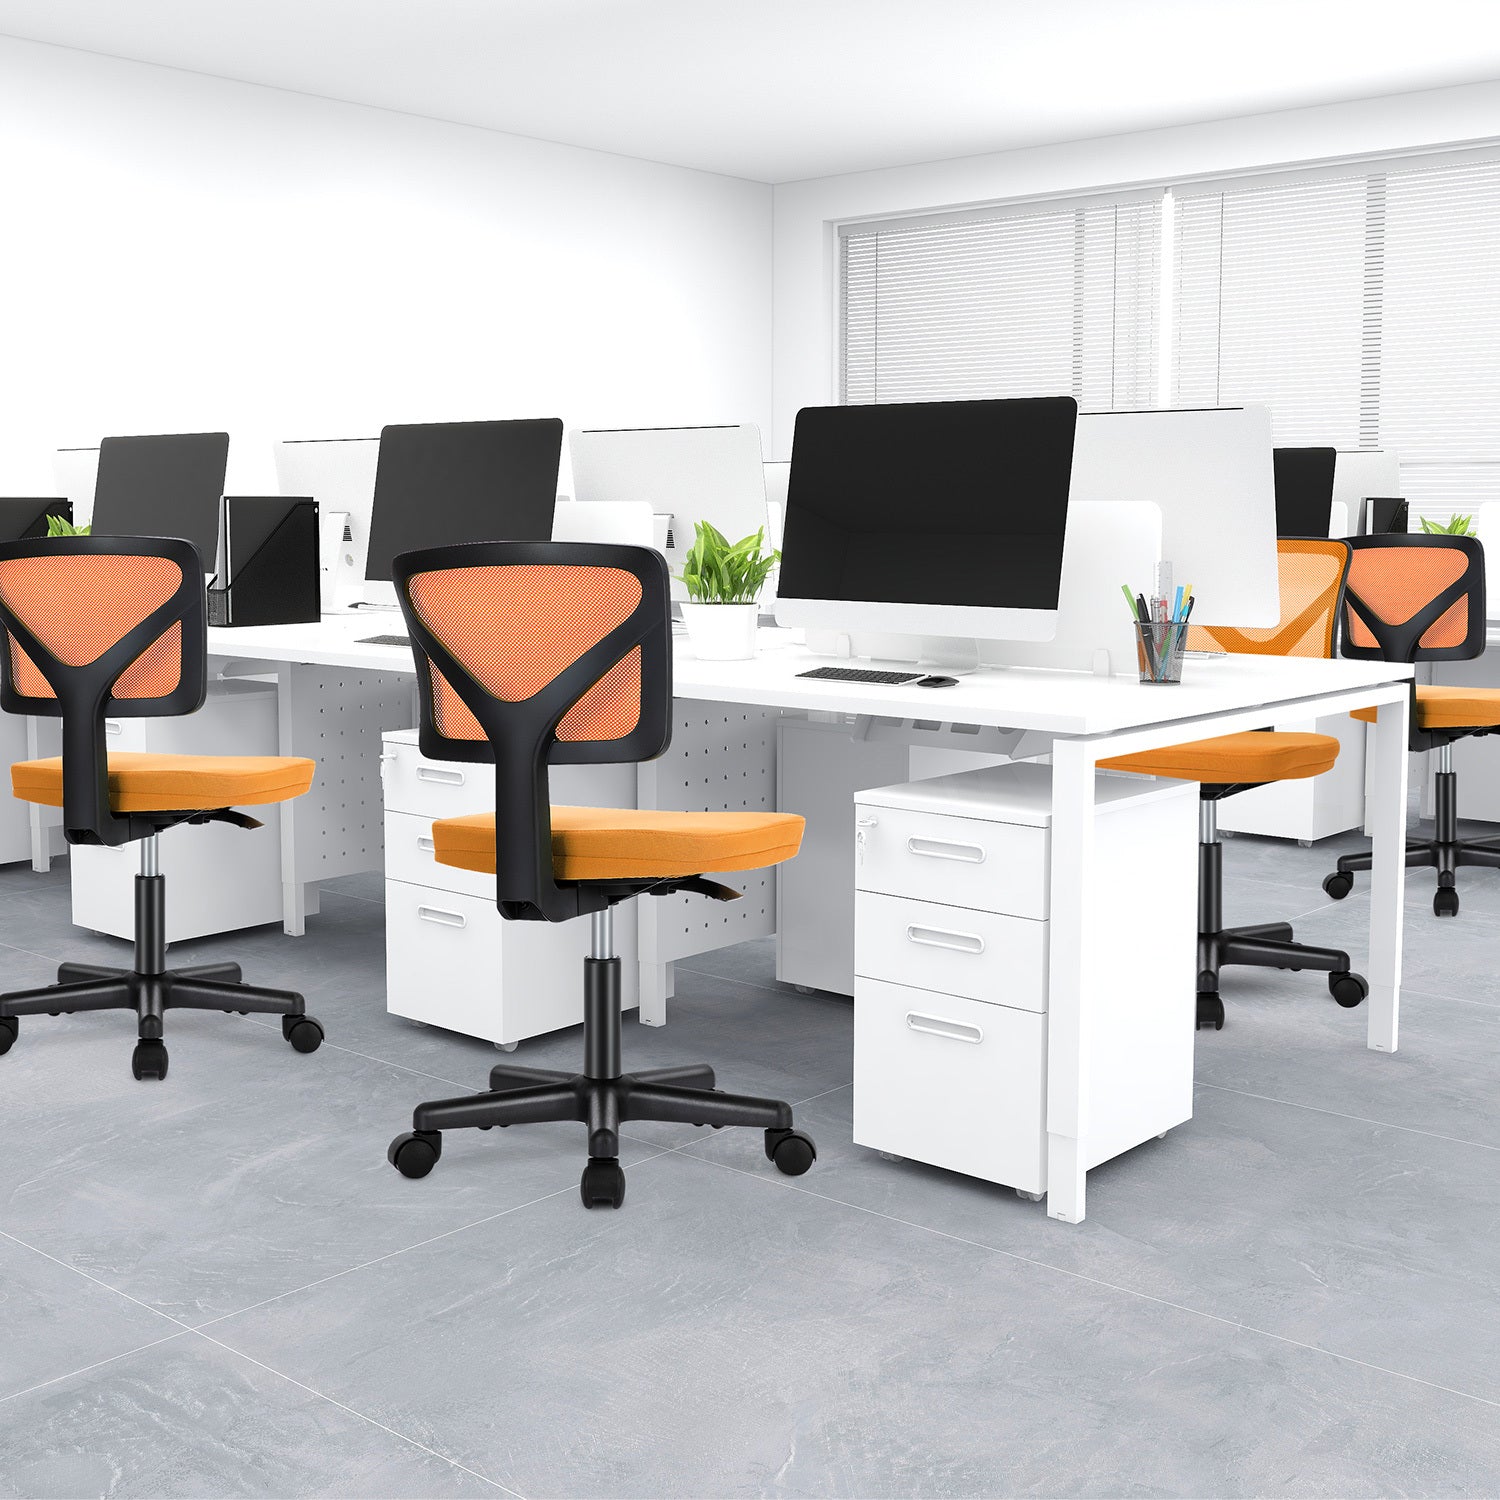 Sweetcrispy Armless Desk Chair Small Home Office Chair orange-nylon mesh